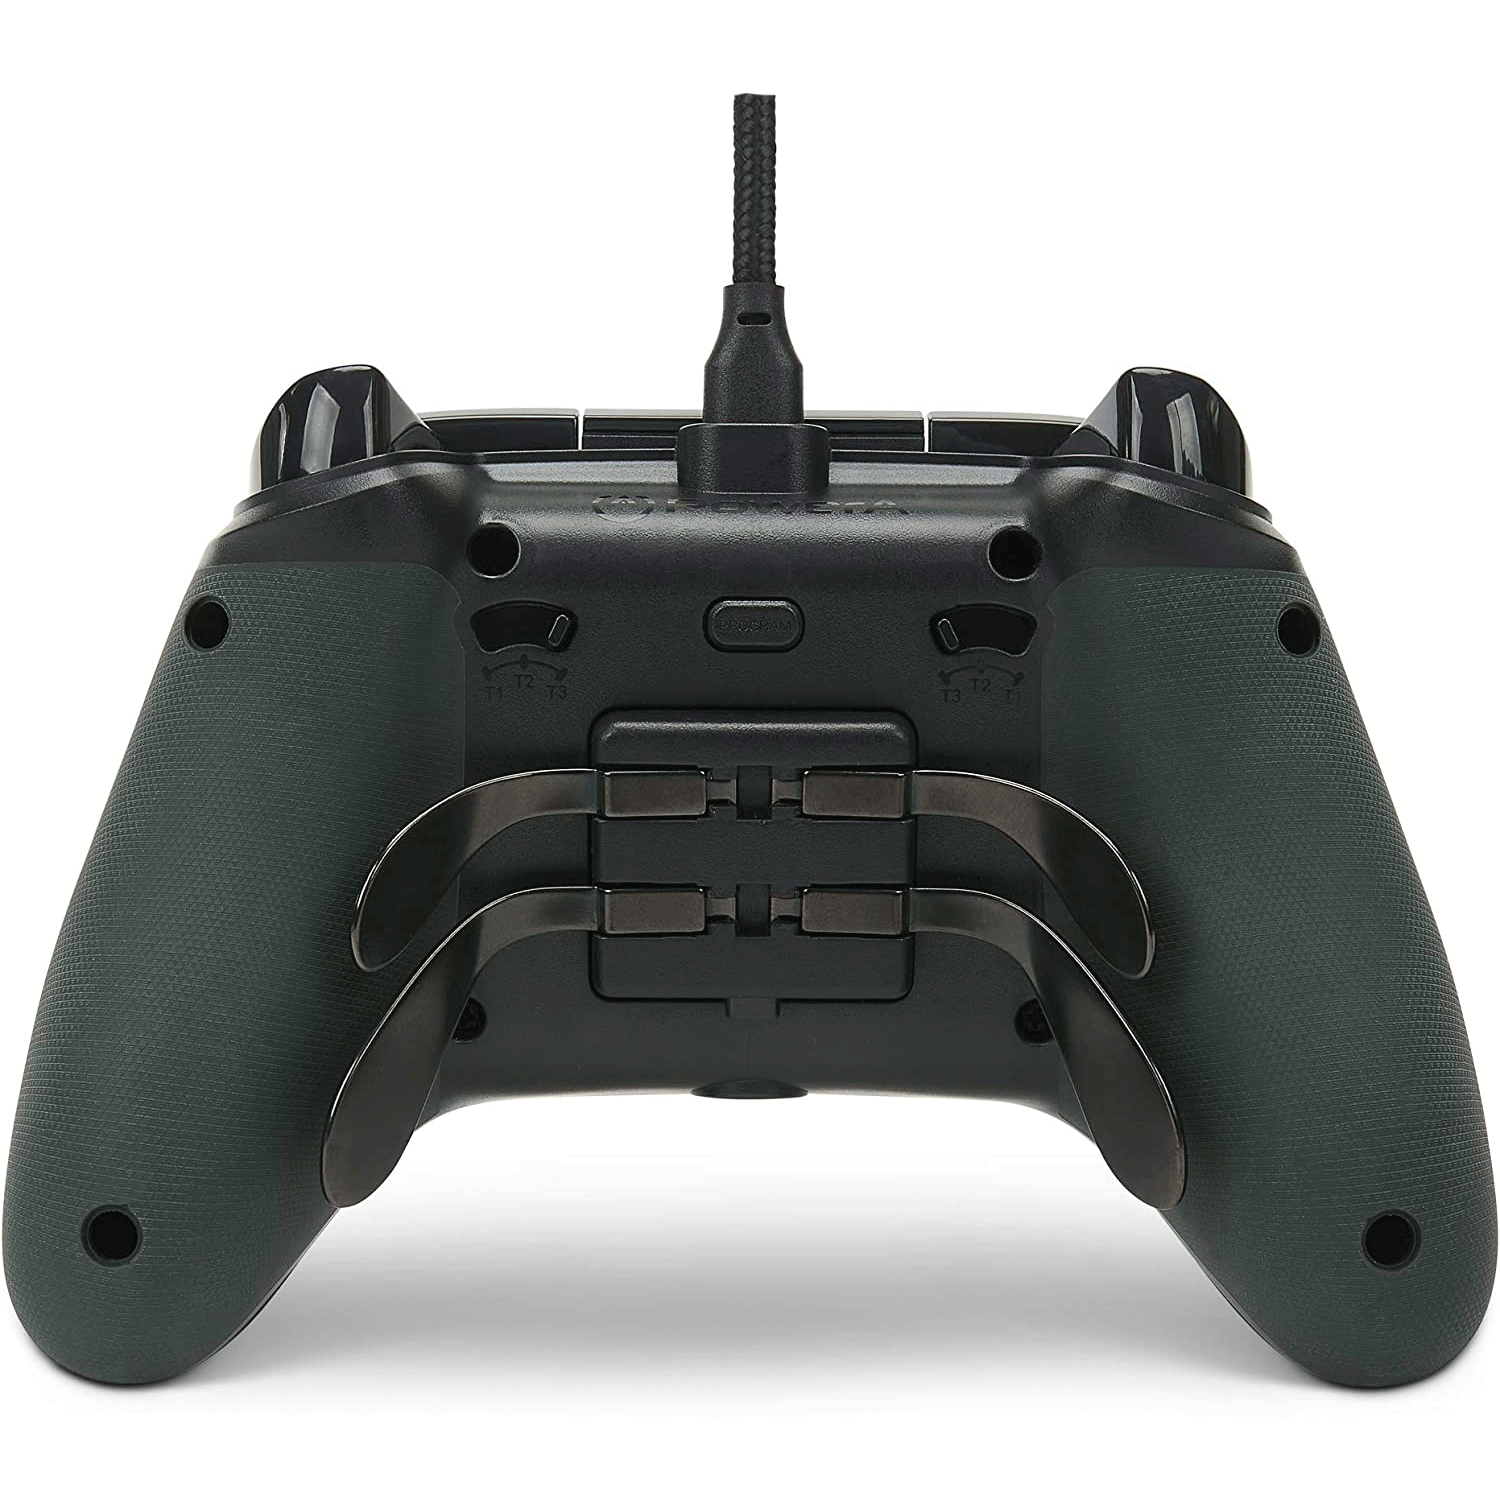 Controle PowerA Fusion Pro 2 Wired Controller para Xbox -